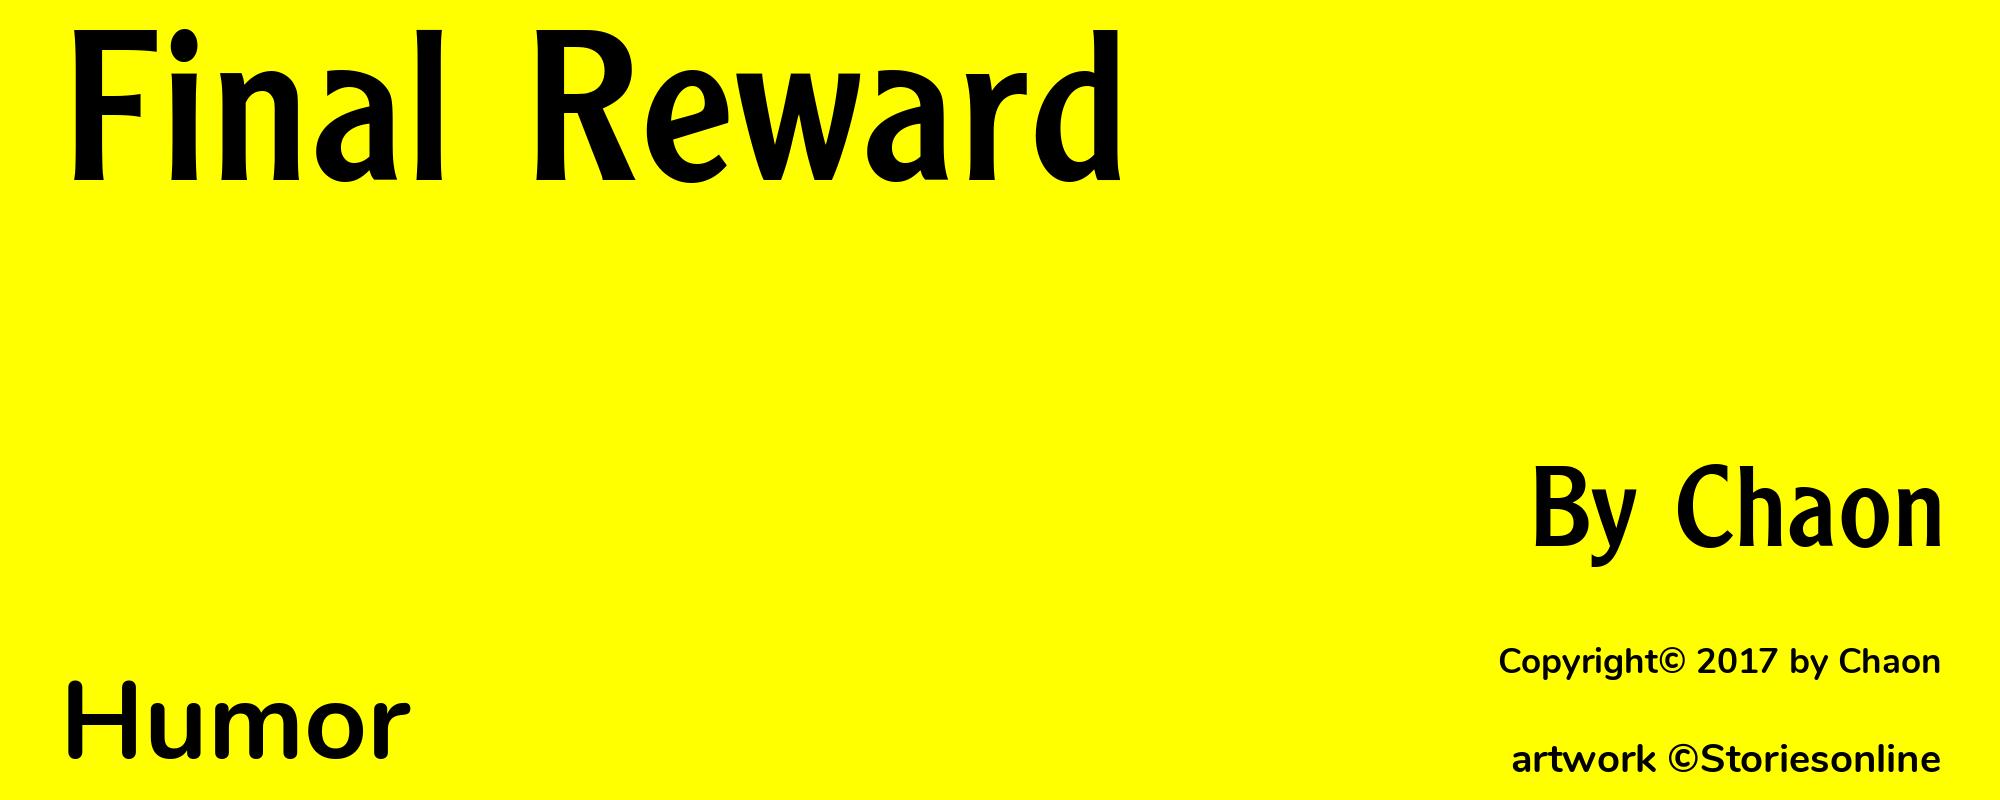 Final Reward - Cover